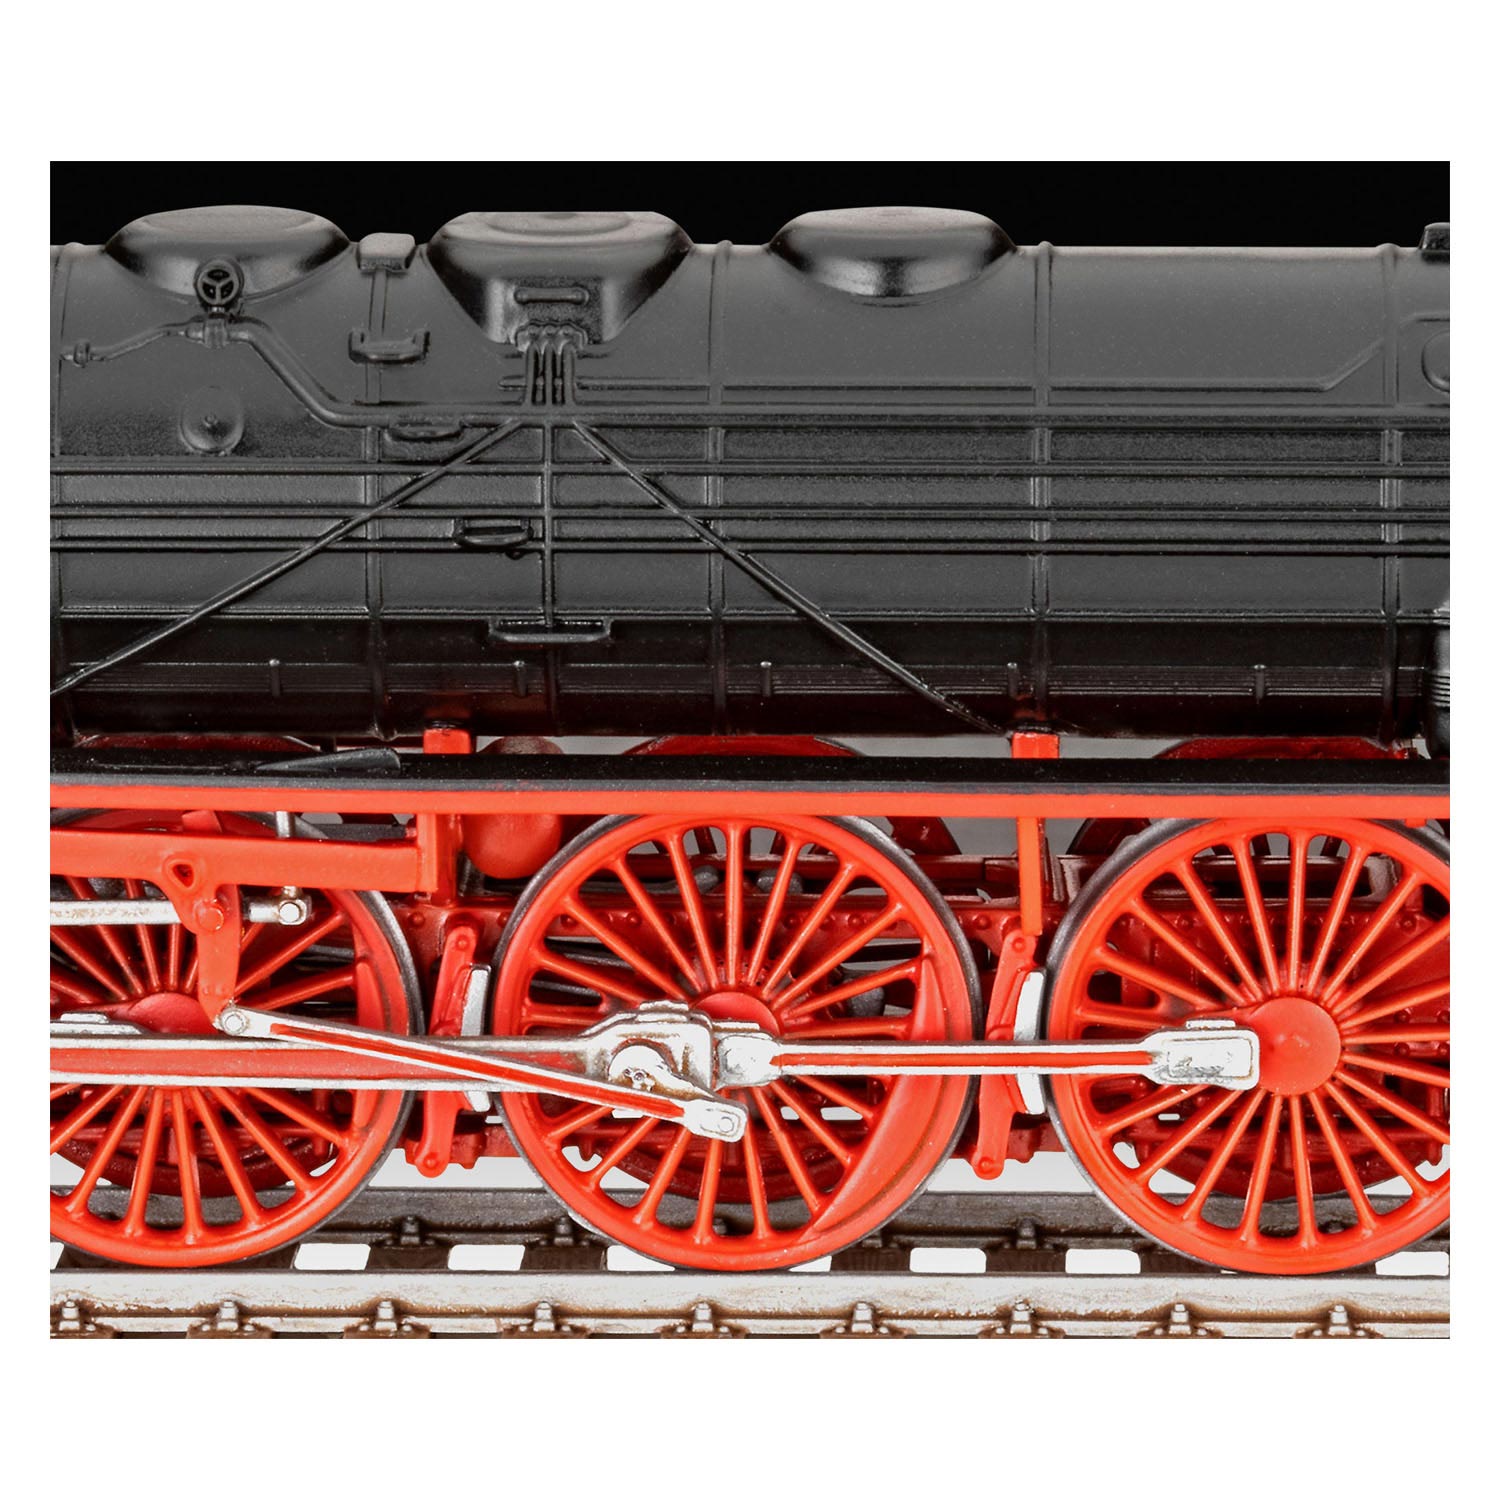 Revell Express Lokomotive BR 02 & Tender 2'2'T30 Modellbausatz